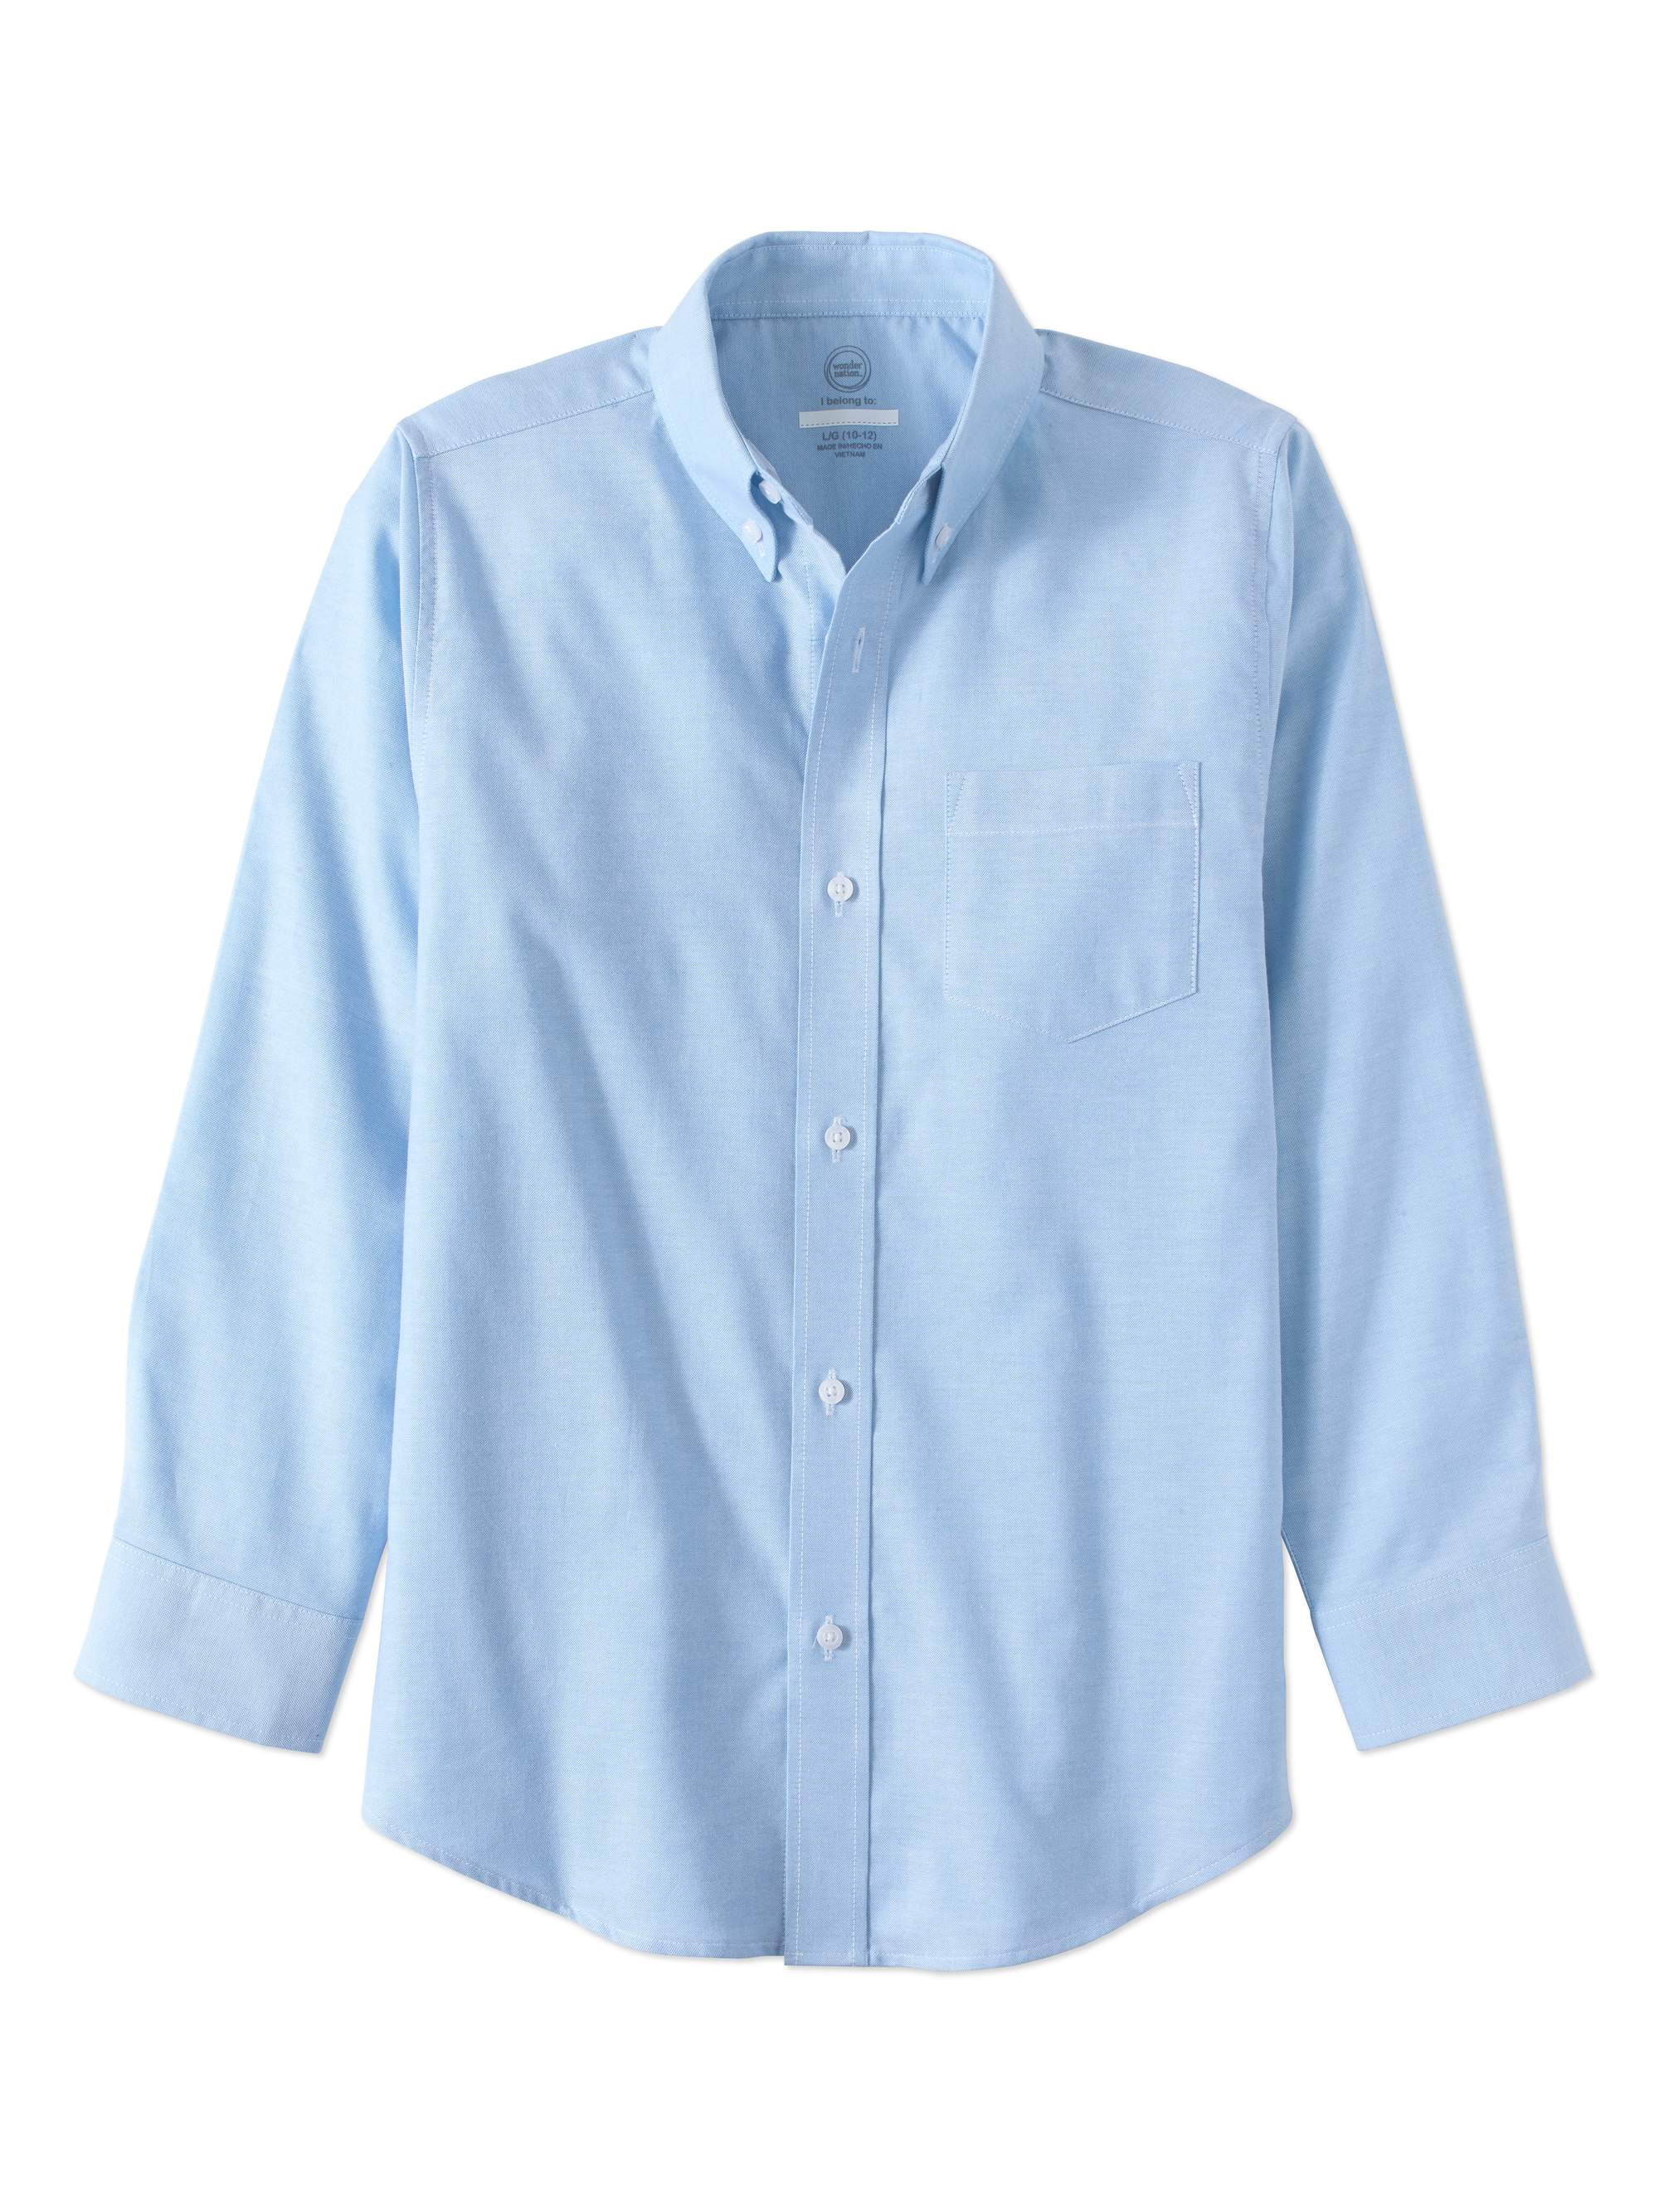 Essentials Boys' Uniform Long-Sleeve Woven Oxford Button-Down Shirts 